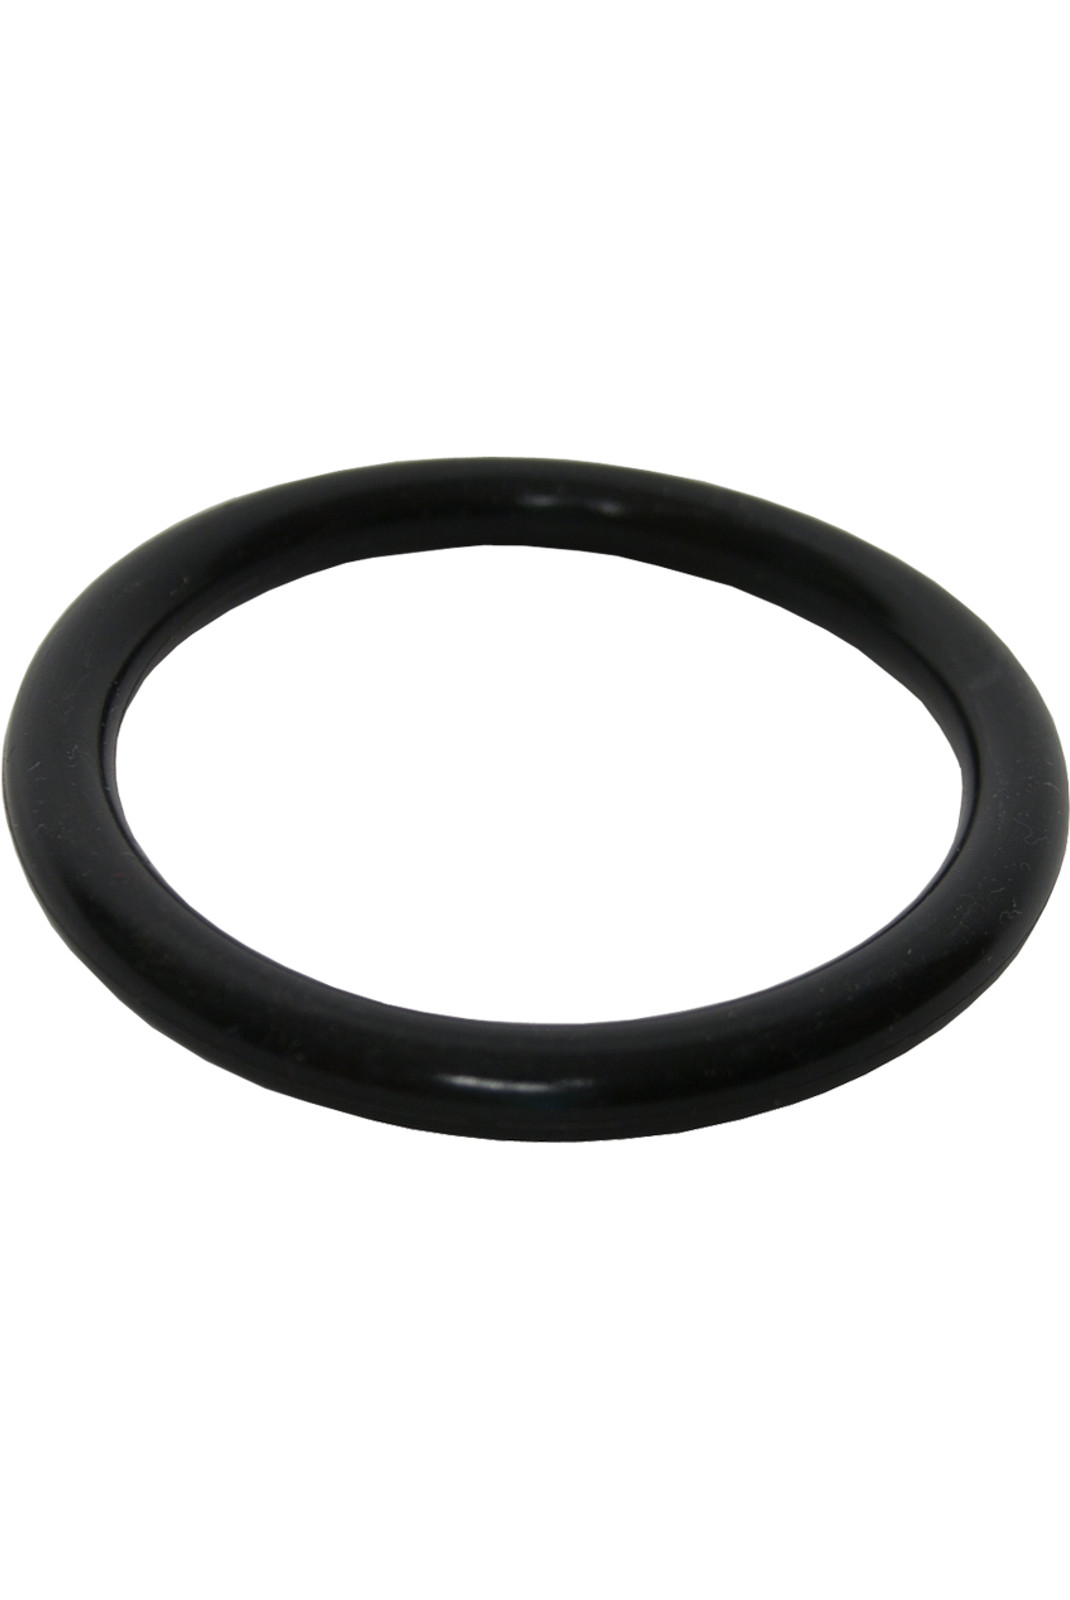 Idiopan 4-Inch Display Ring - Black